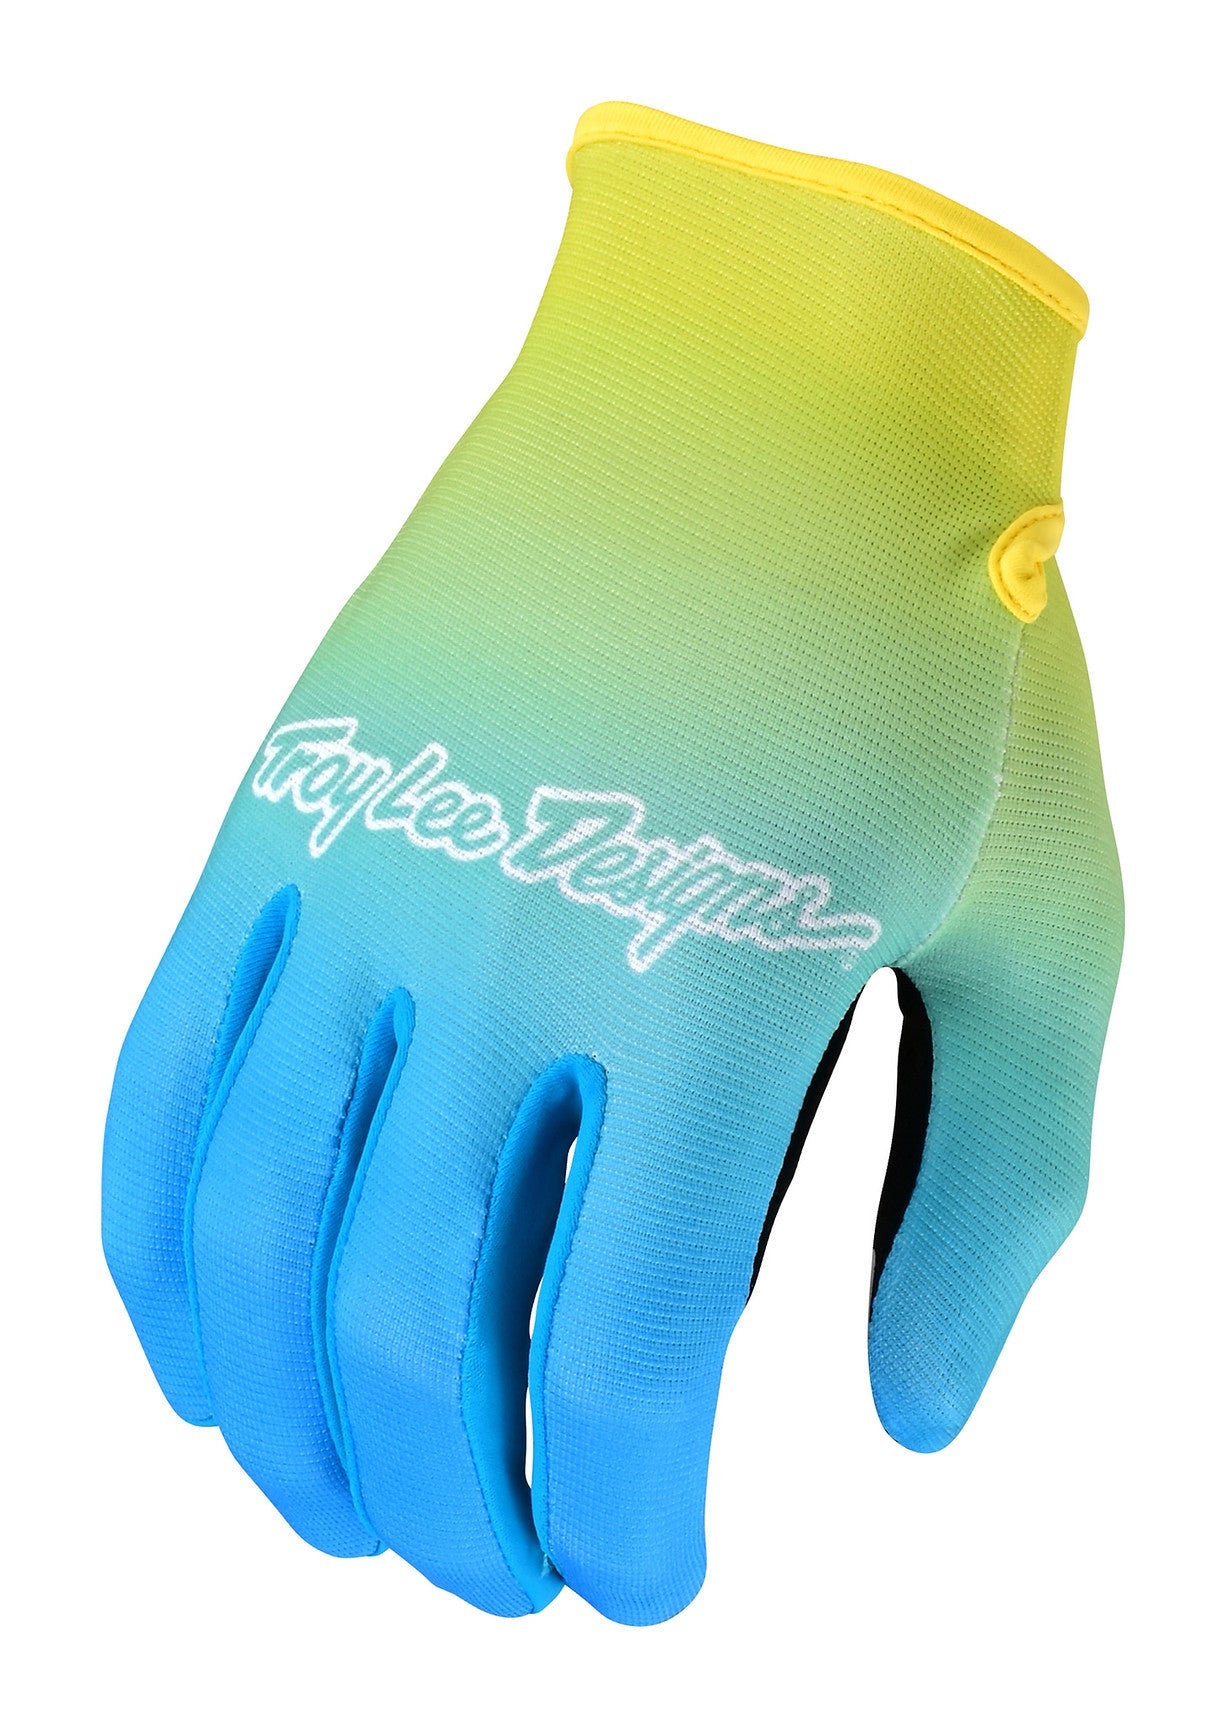 Troy Lee Designs Guys Flowline Mountain Bike Glove Faze Blue Yellow Top Knuckle Side